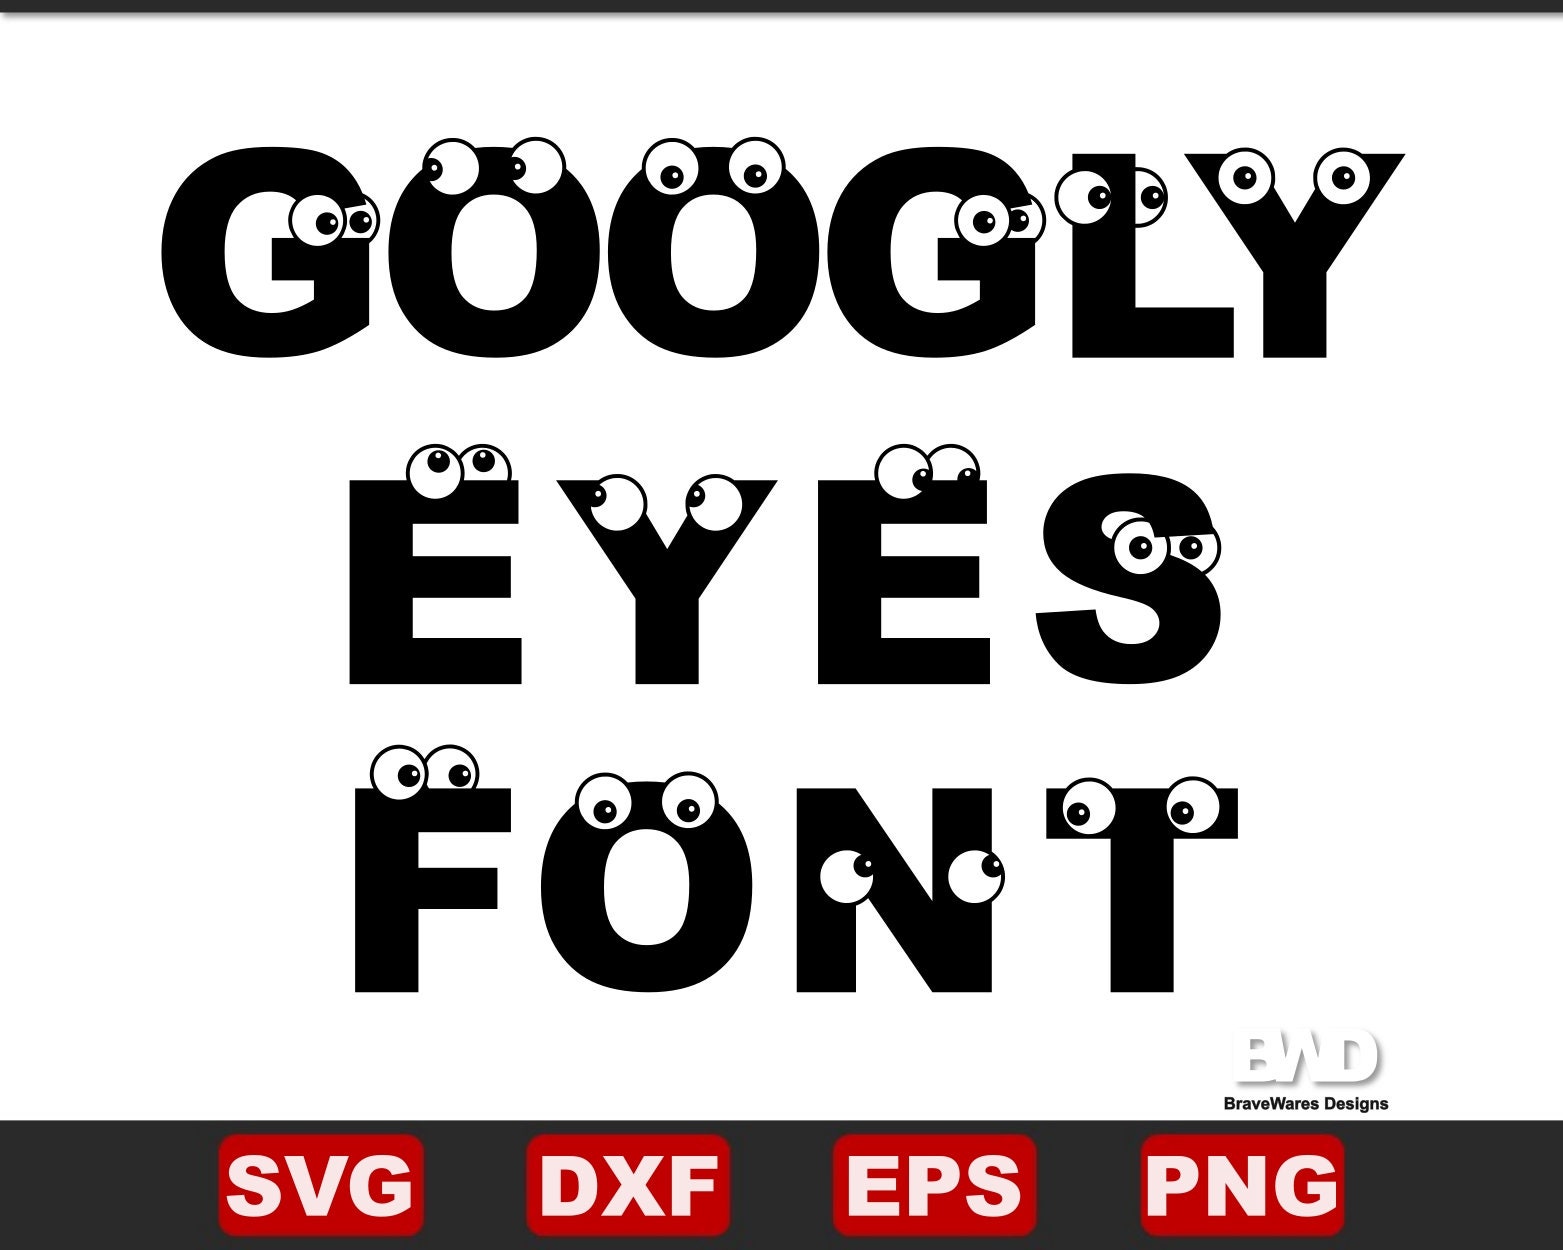 Large Googly Eyes 5/8 16mm - 027321442166